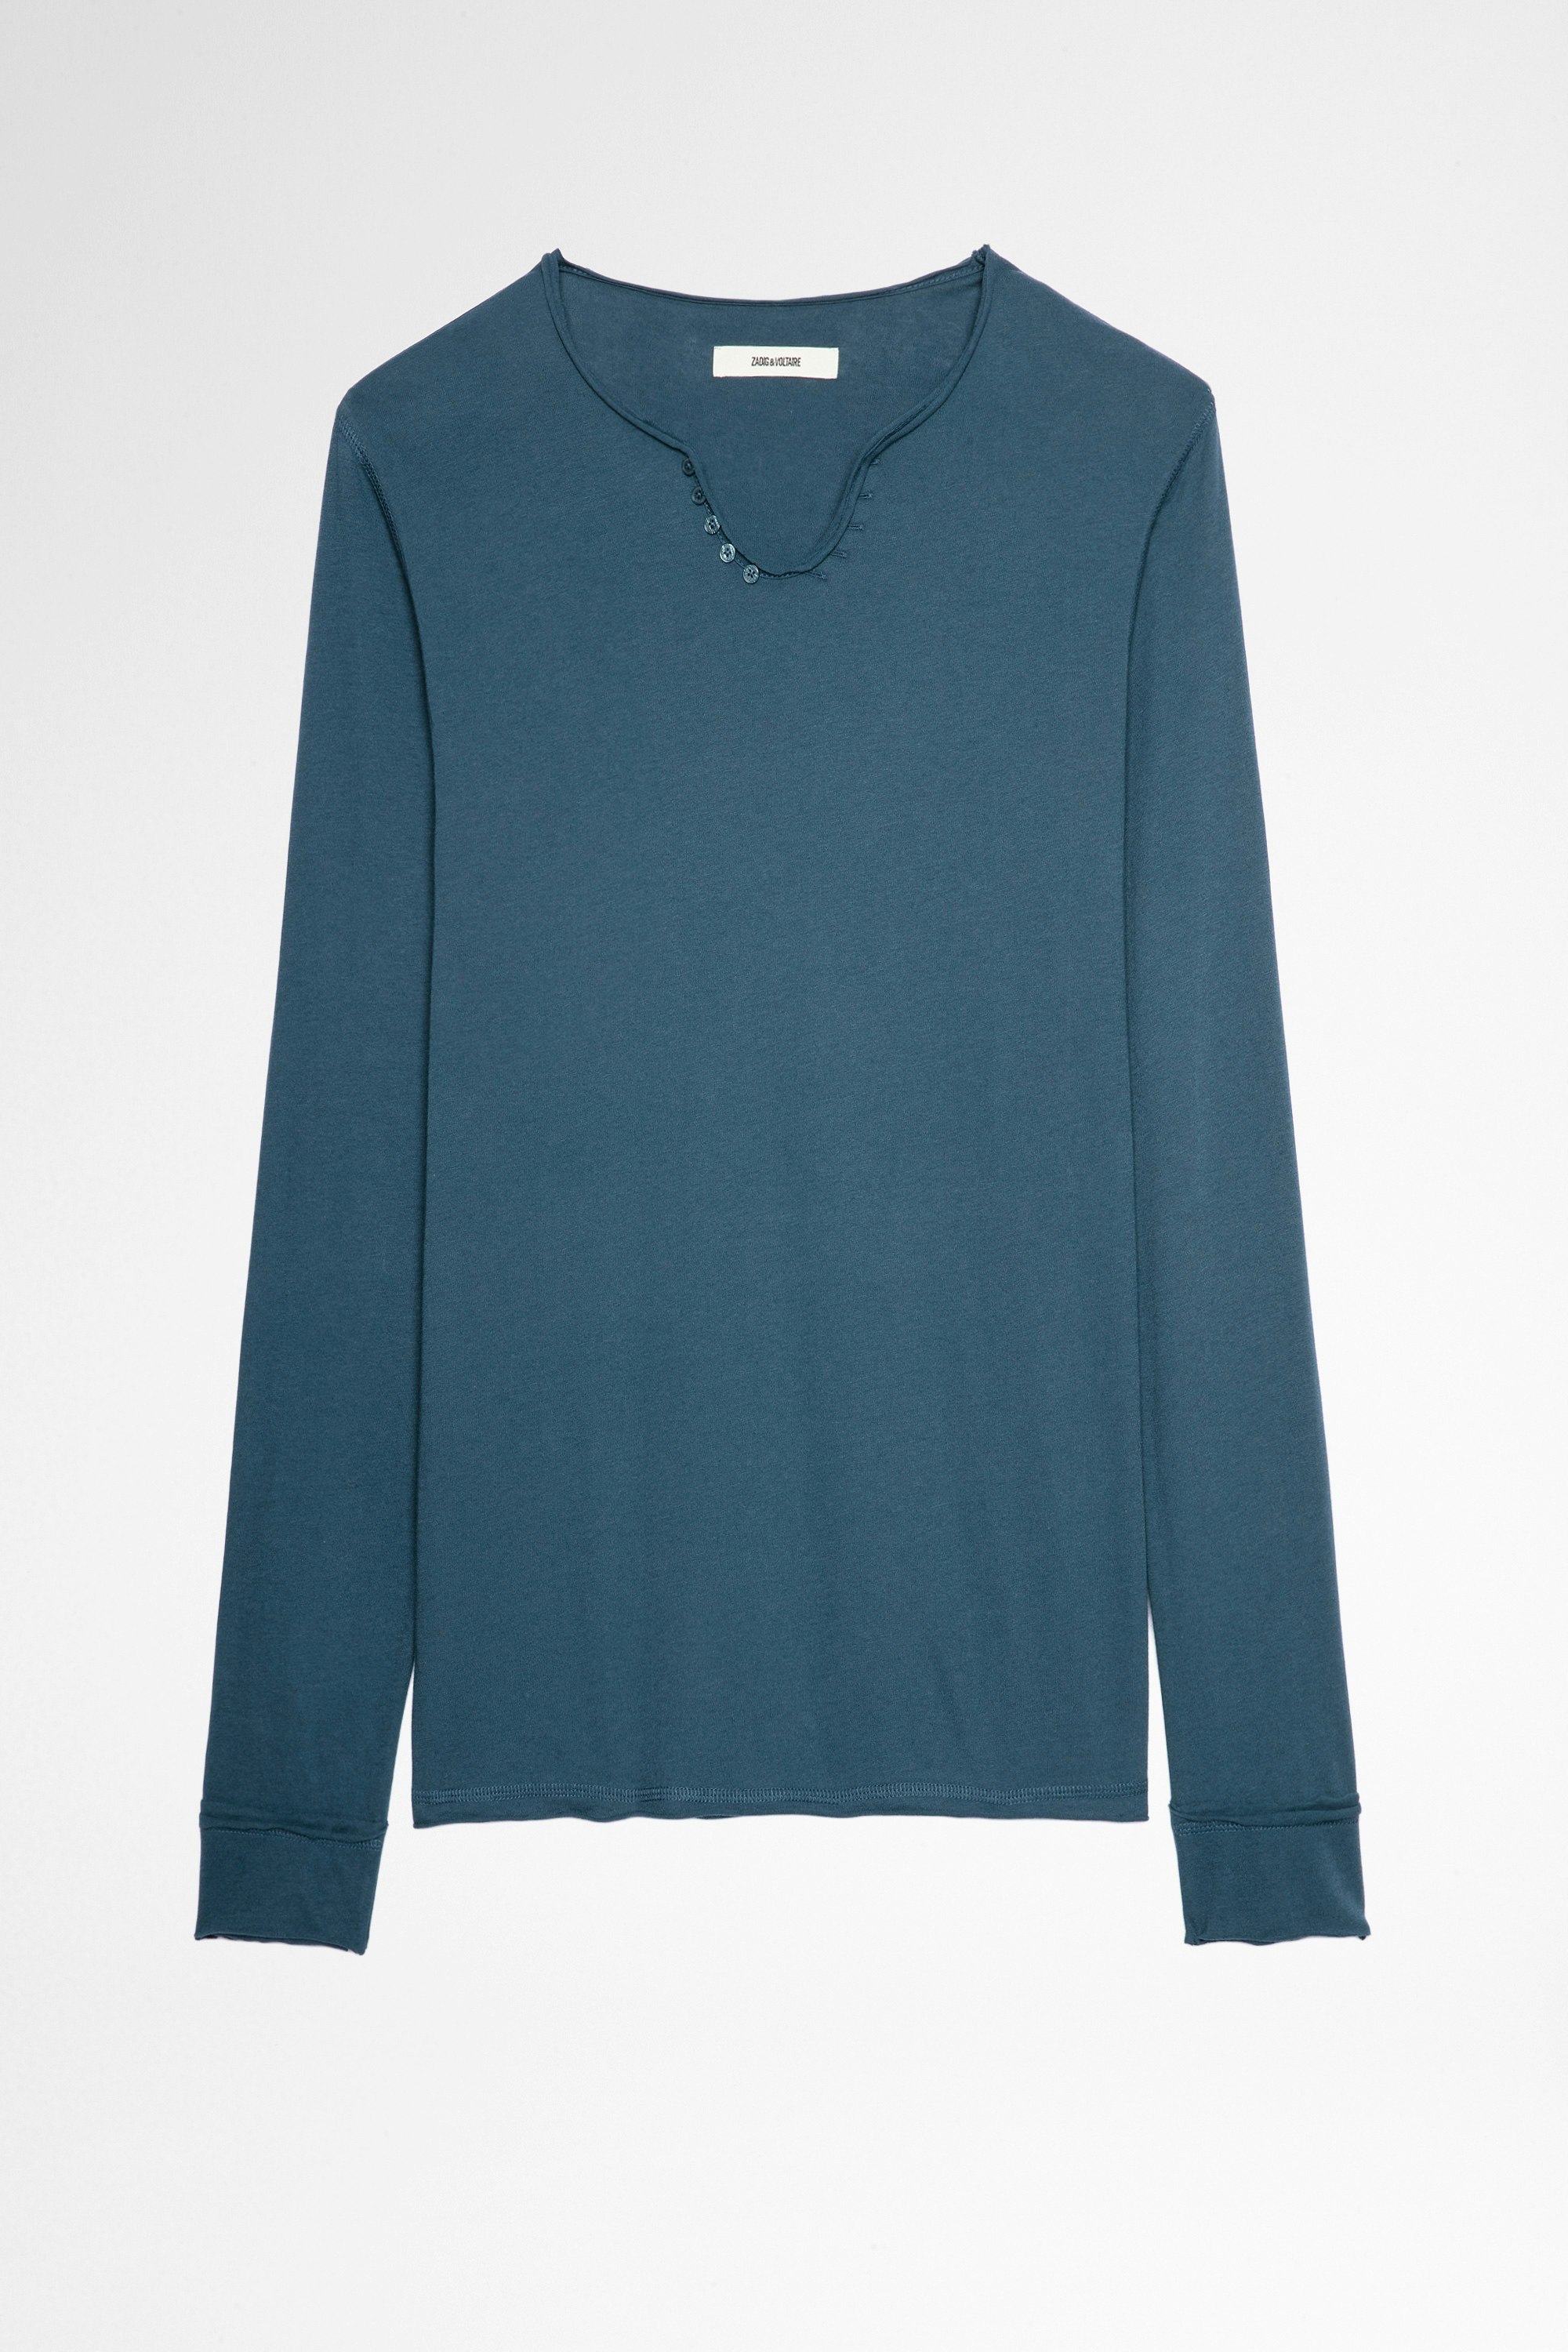 Monastir T-Shirt Men's Henley t-shirt in blue-grey cotton with Hédoniste print